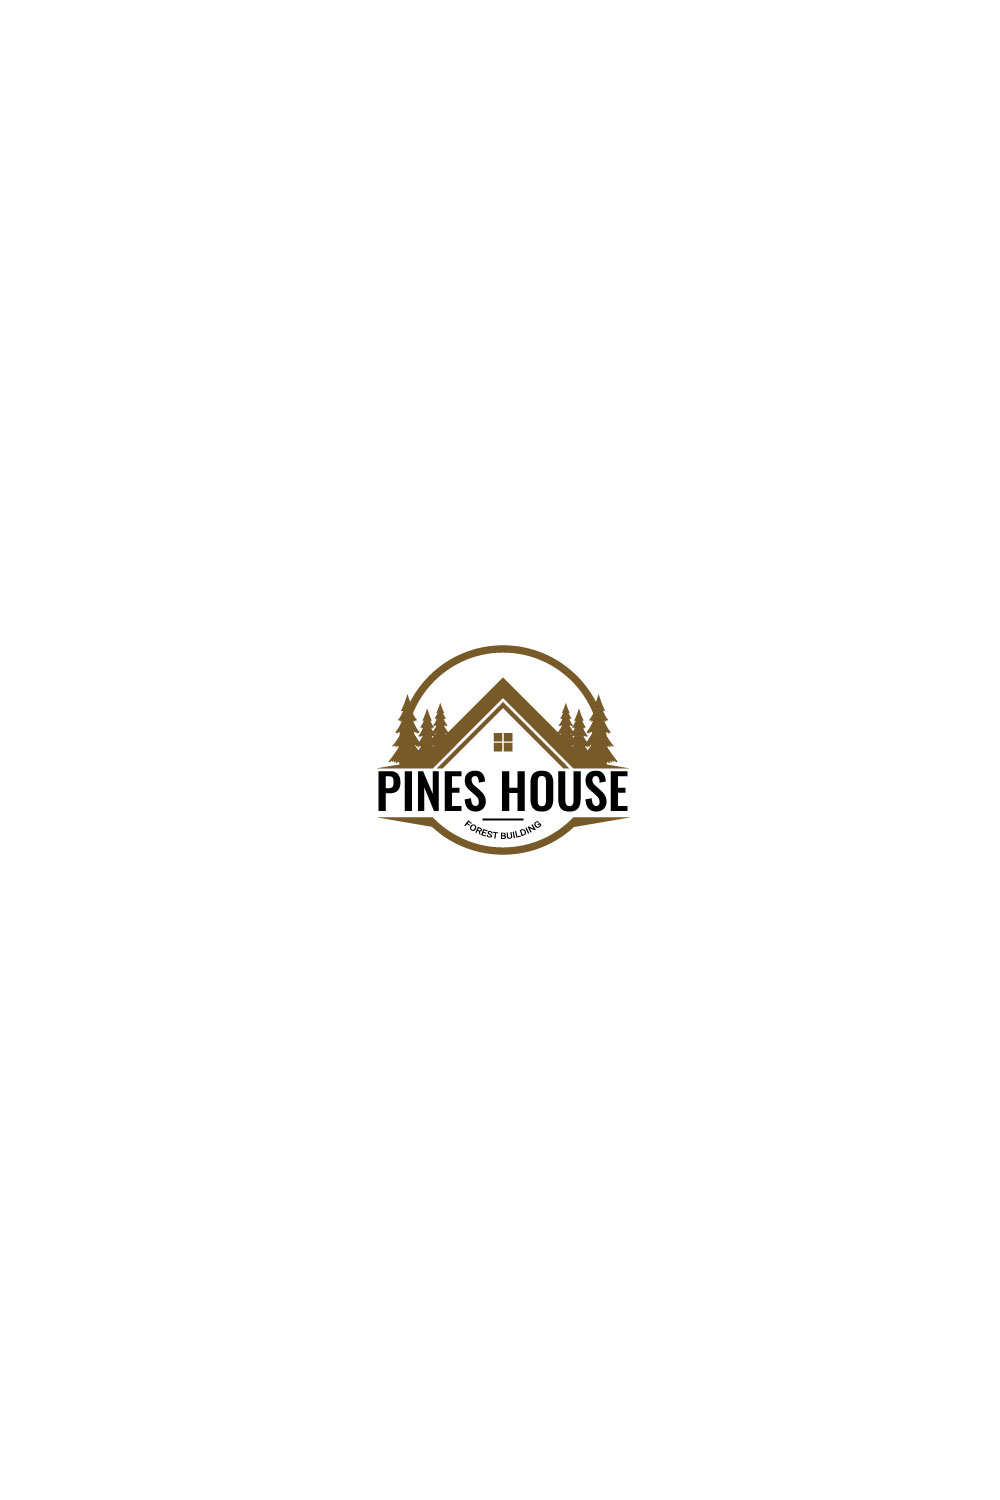 Pine House Logo design pinterest preview image.